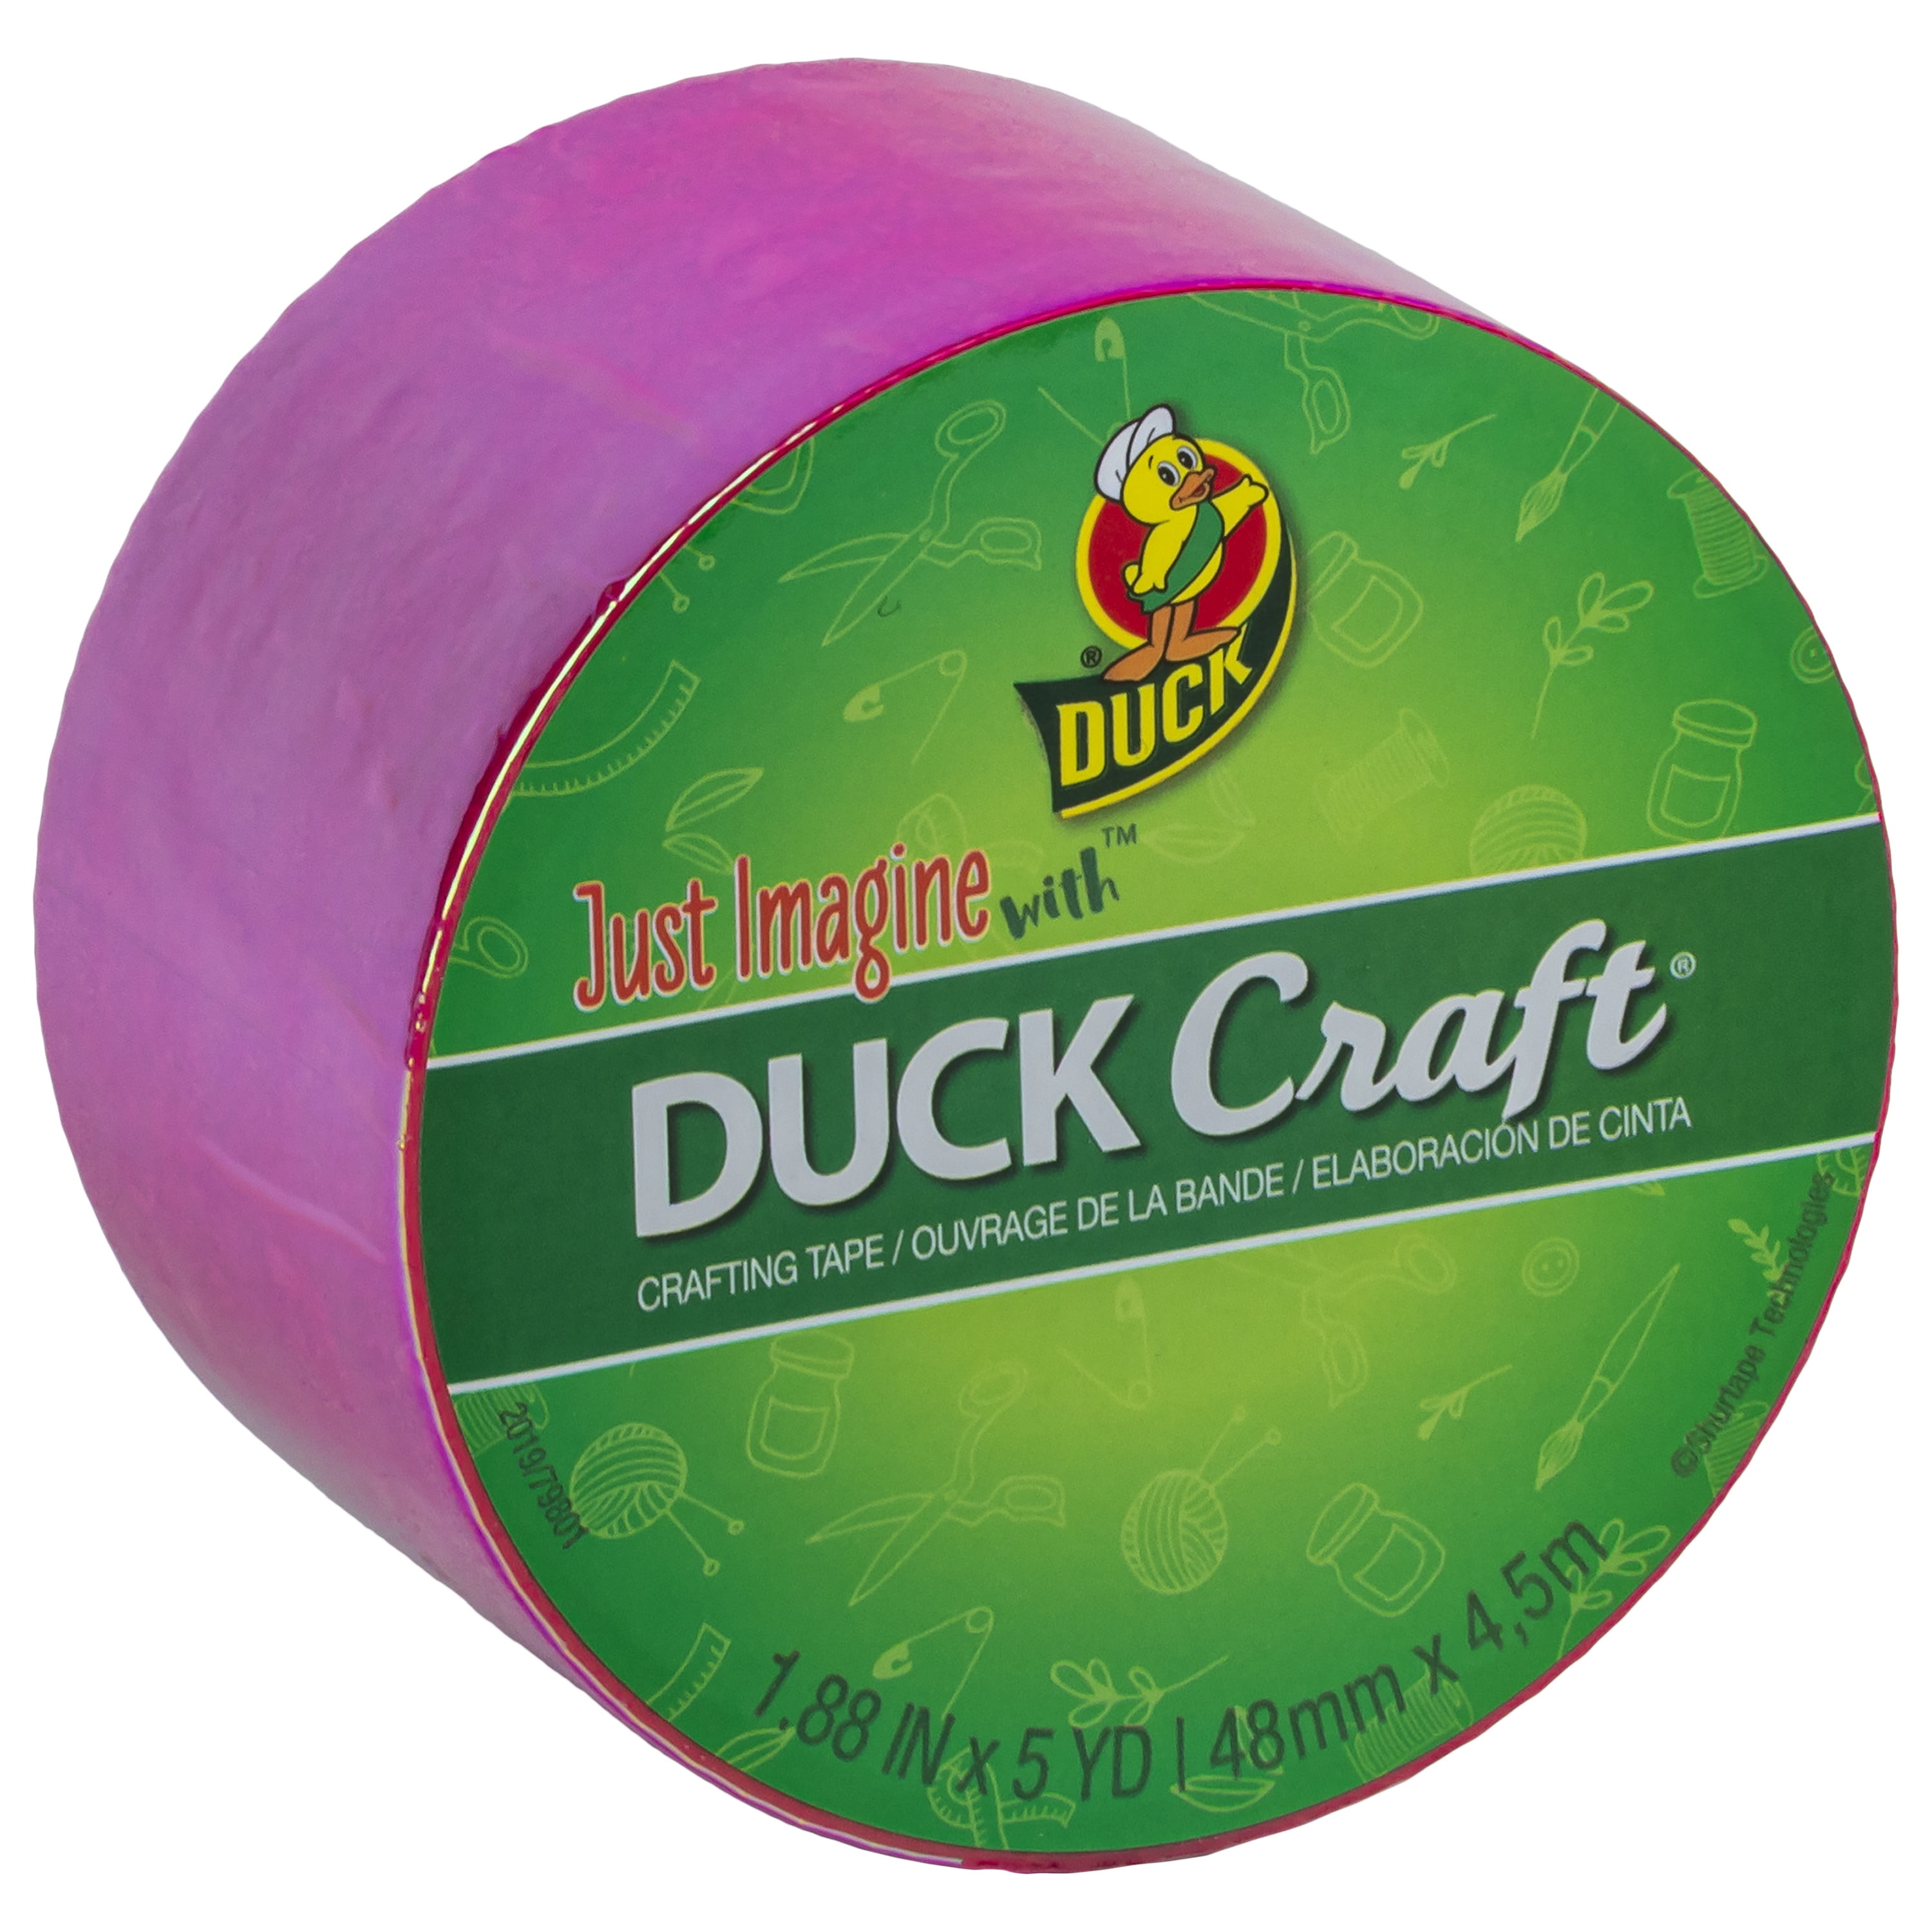 duct tape in pink.  Duck tape, Duct tape, Duck tape crafts